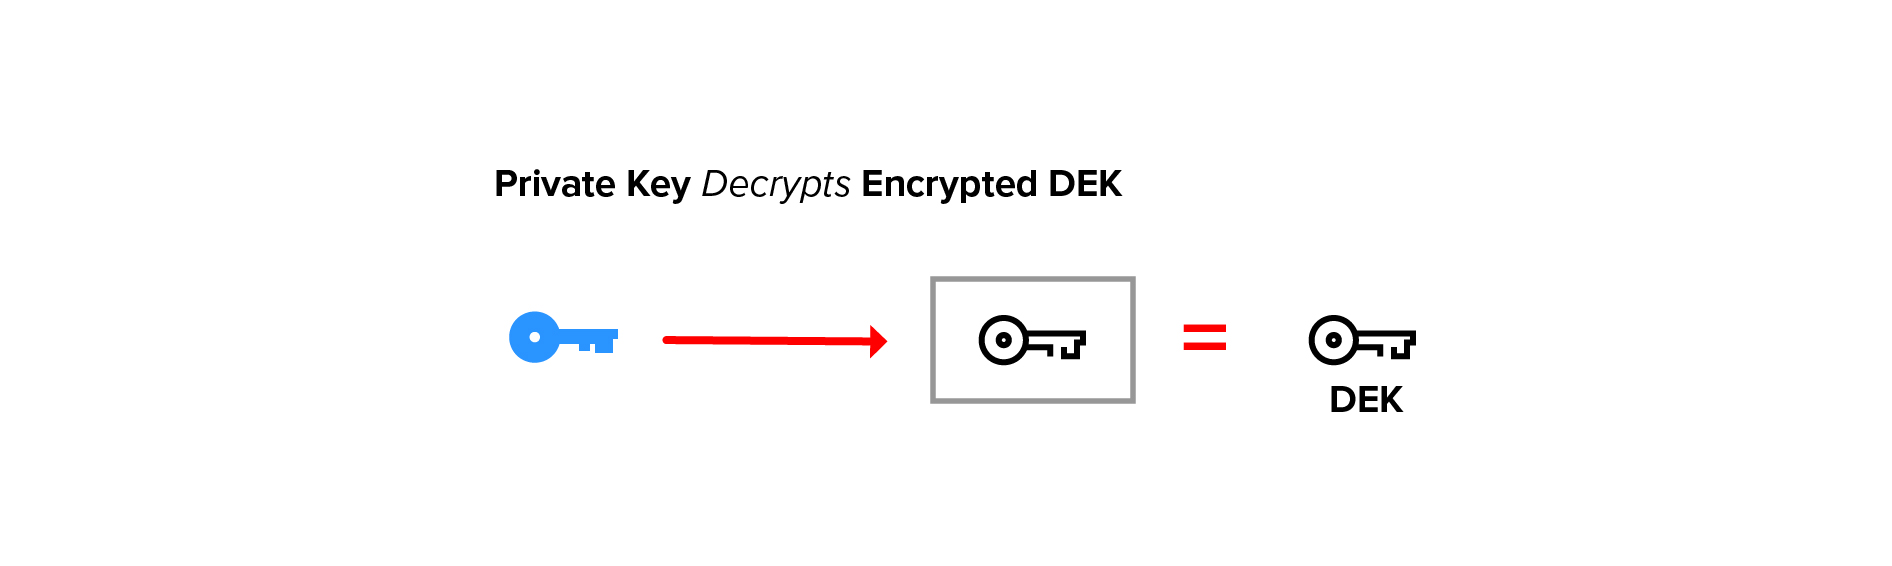 Private key decrypts encrypted DEK